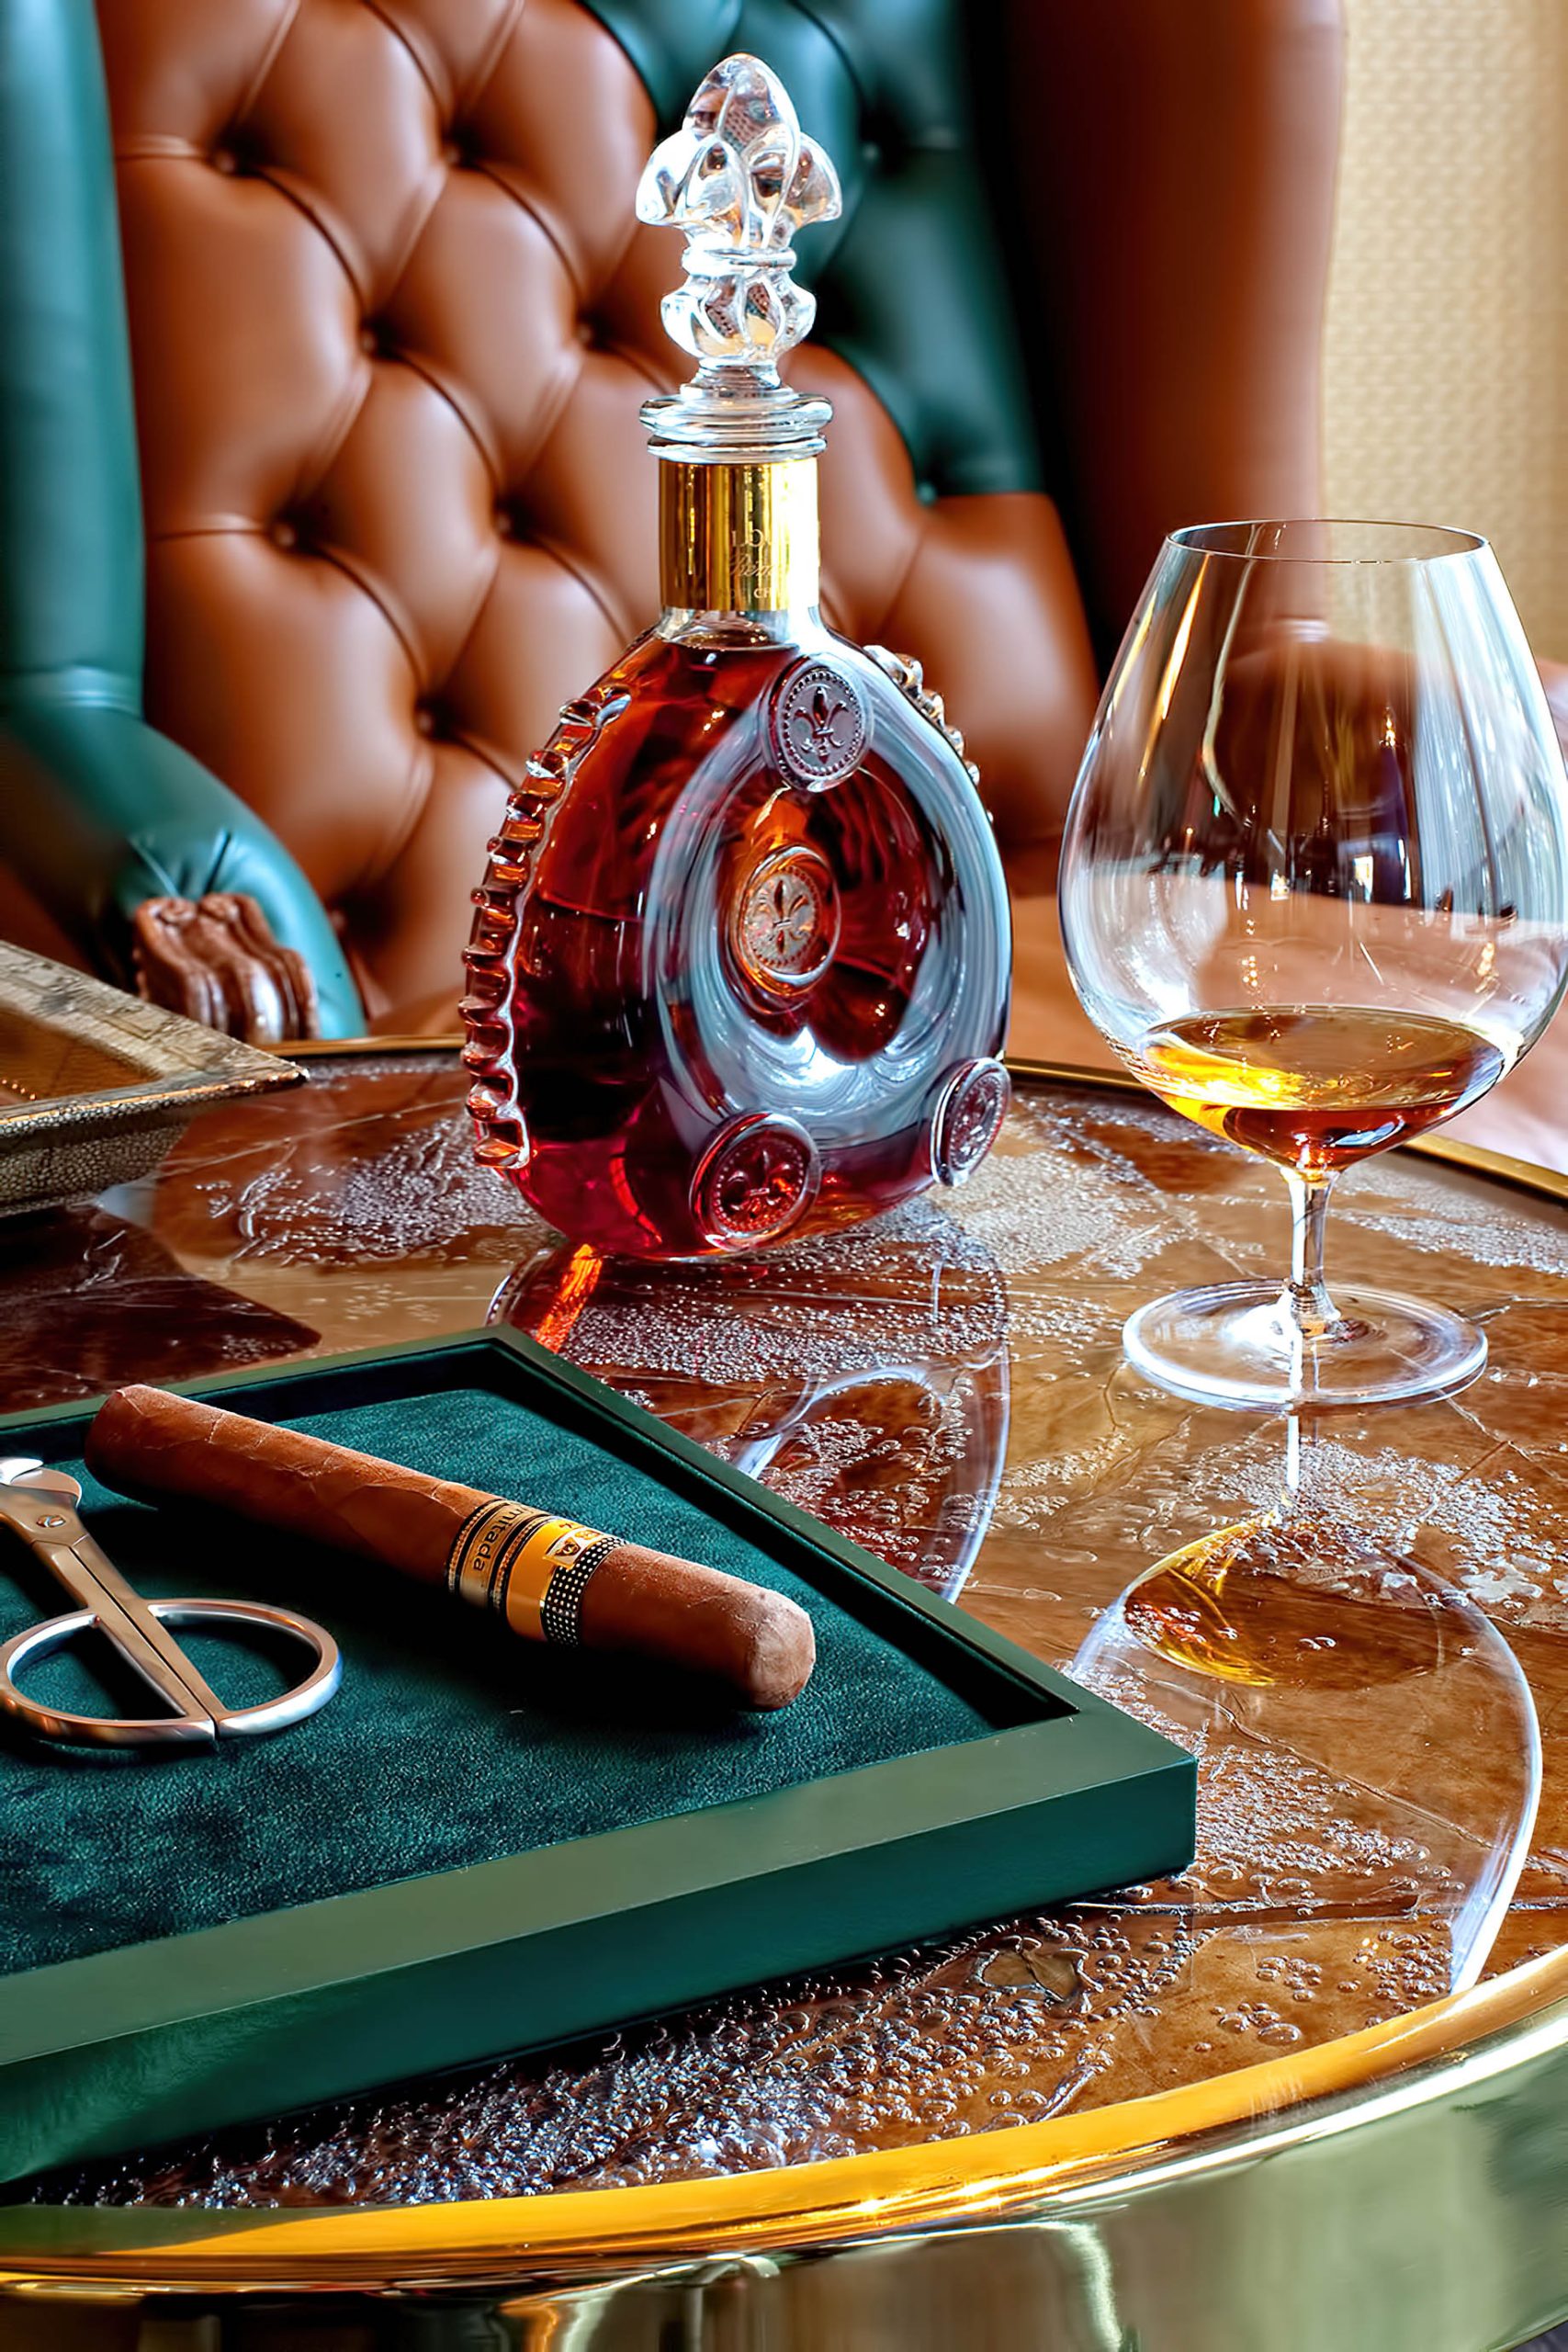 Tschuggen Grand Hotel – Arosa, Switzerland – Cigar Lounge